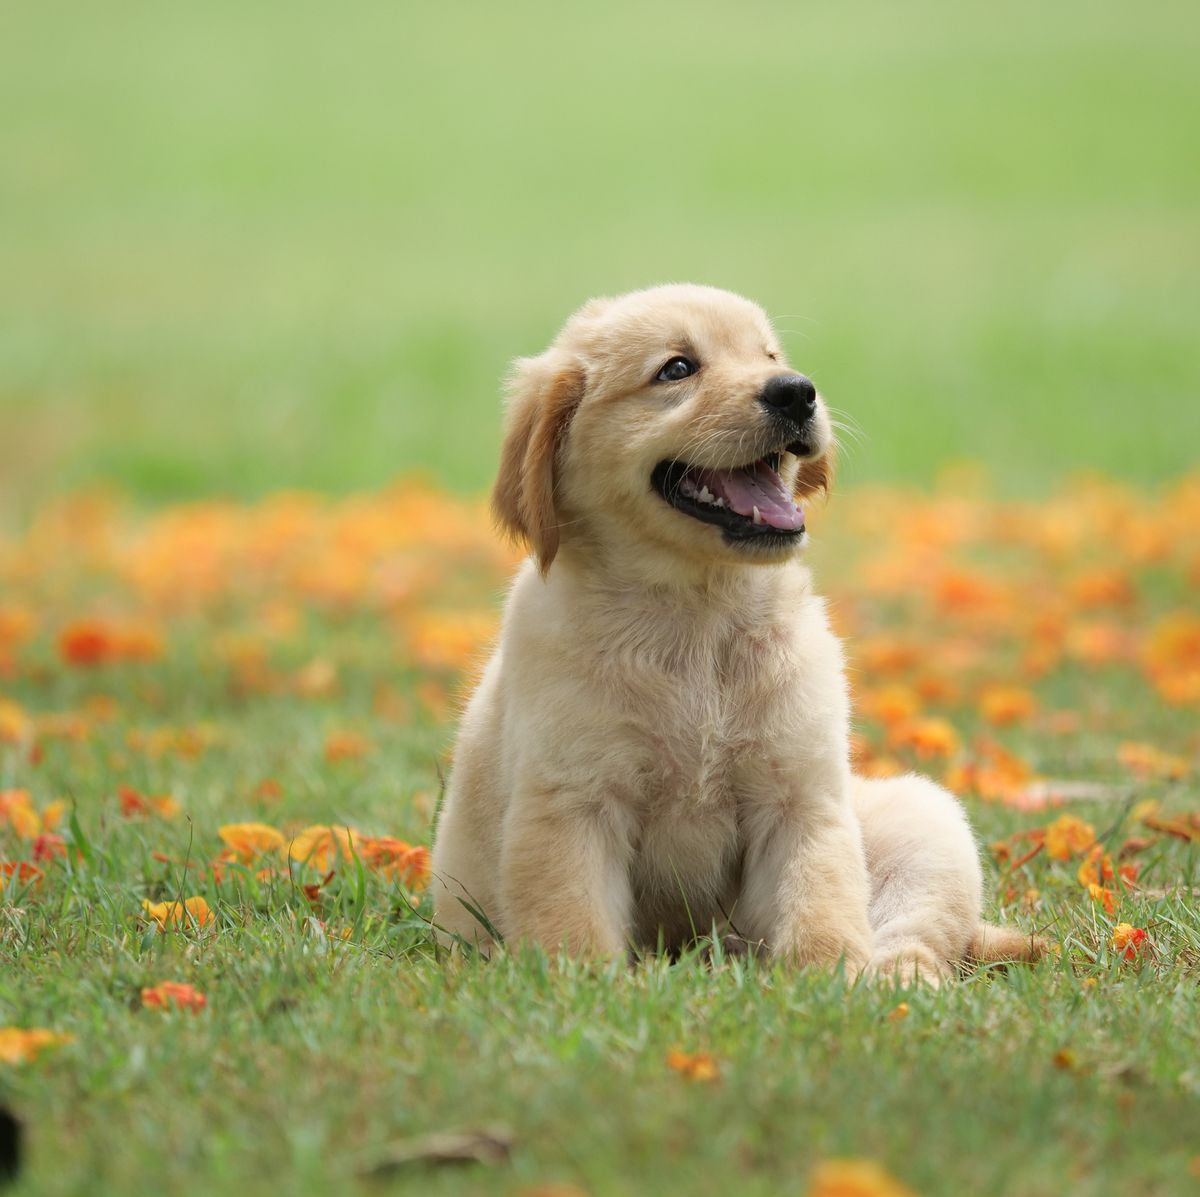 https://hips.hearstapps.com/hmg-prod/images/dog-puppy-on-garden-royalty-free-image-1586966191.jpg?crop=0.752xw:1.00xh;0.175xw,0&resize=1200:*